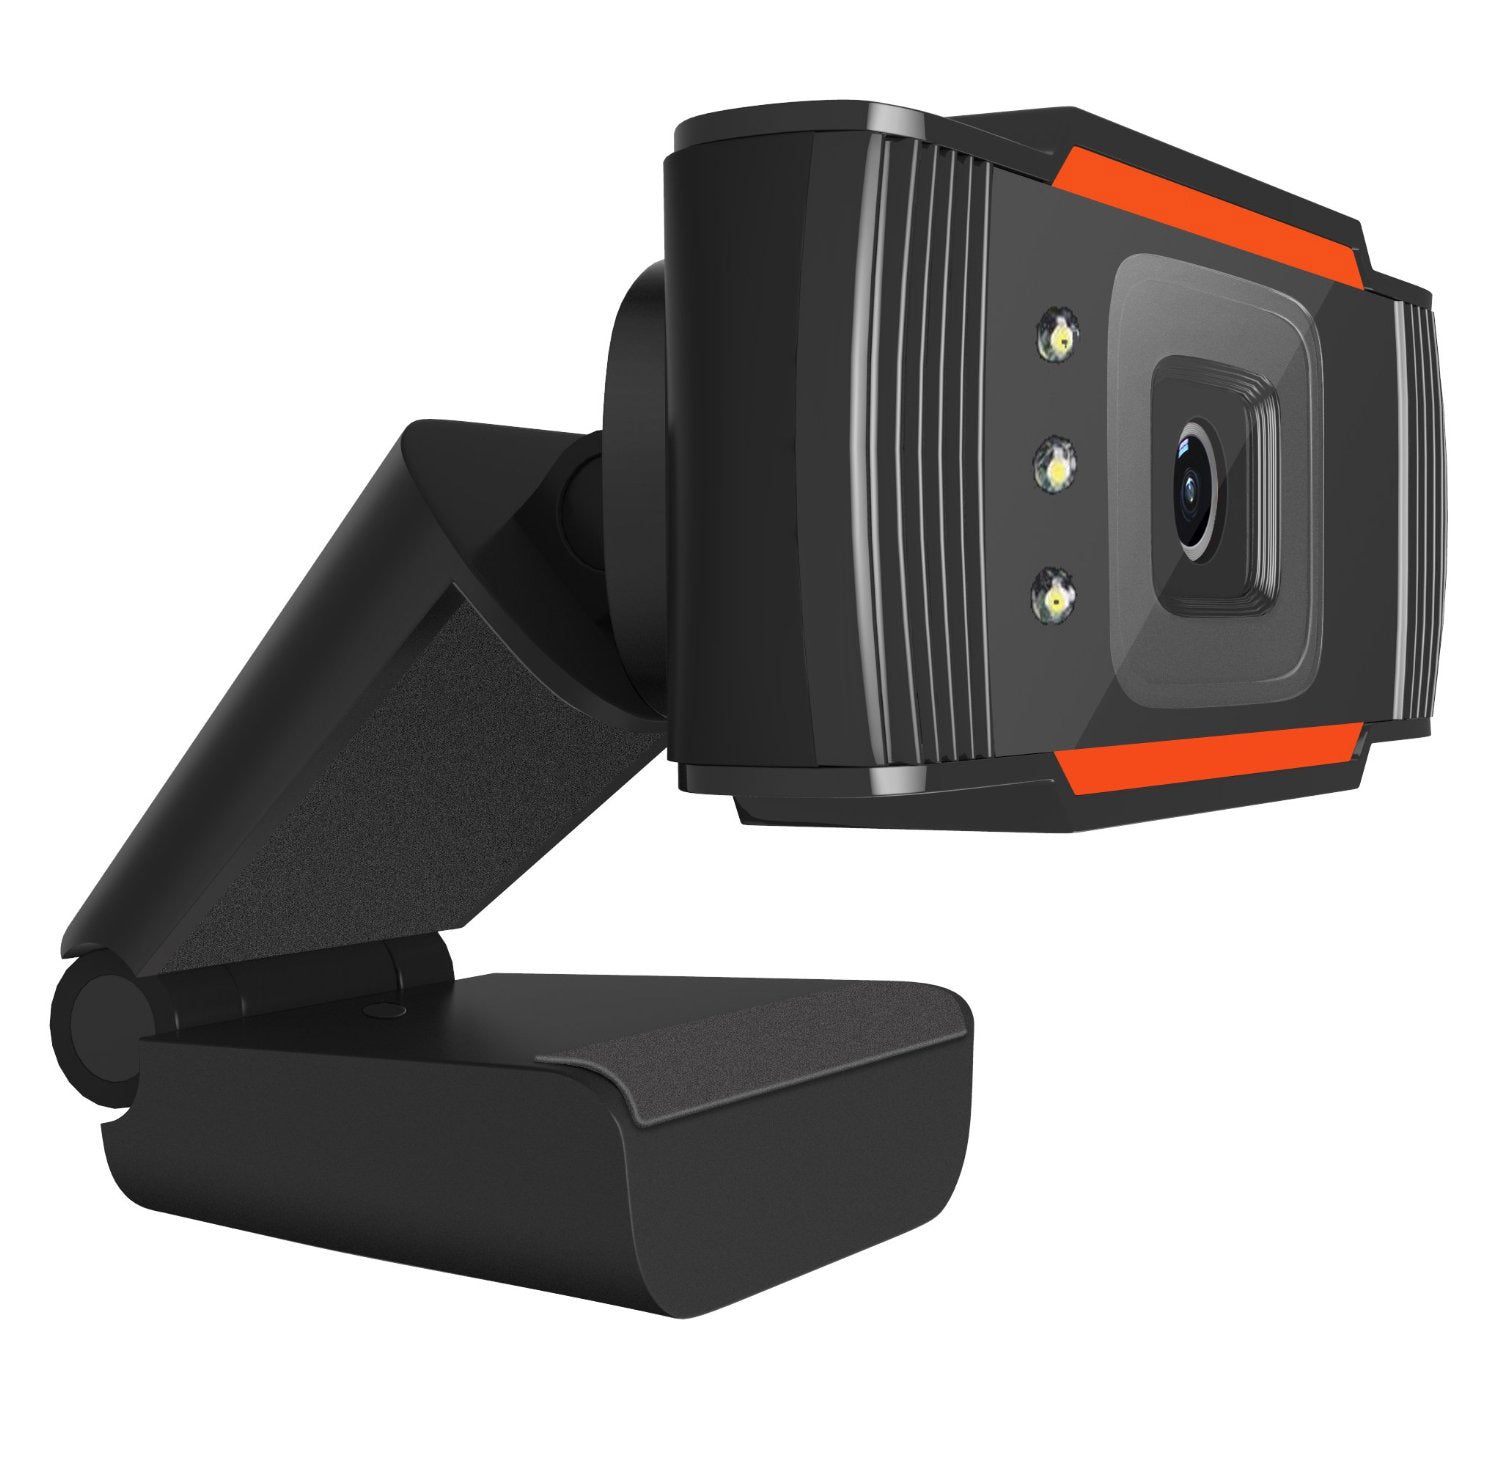 High-definition Webcam With Adjustable Brightness